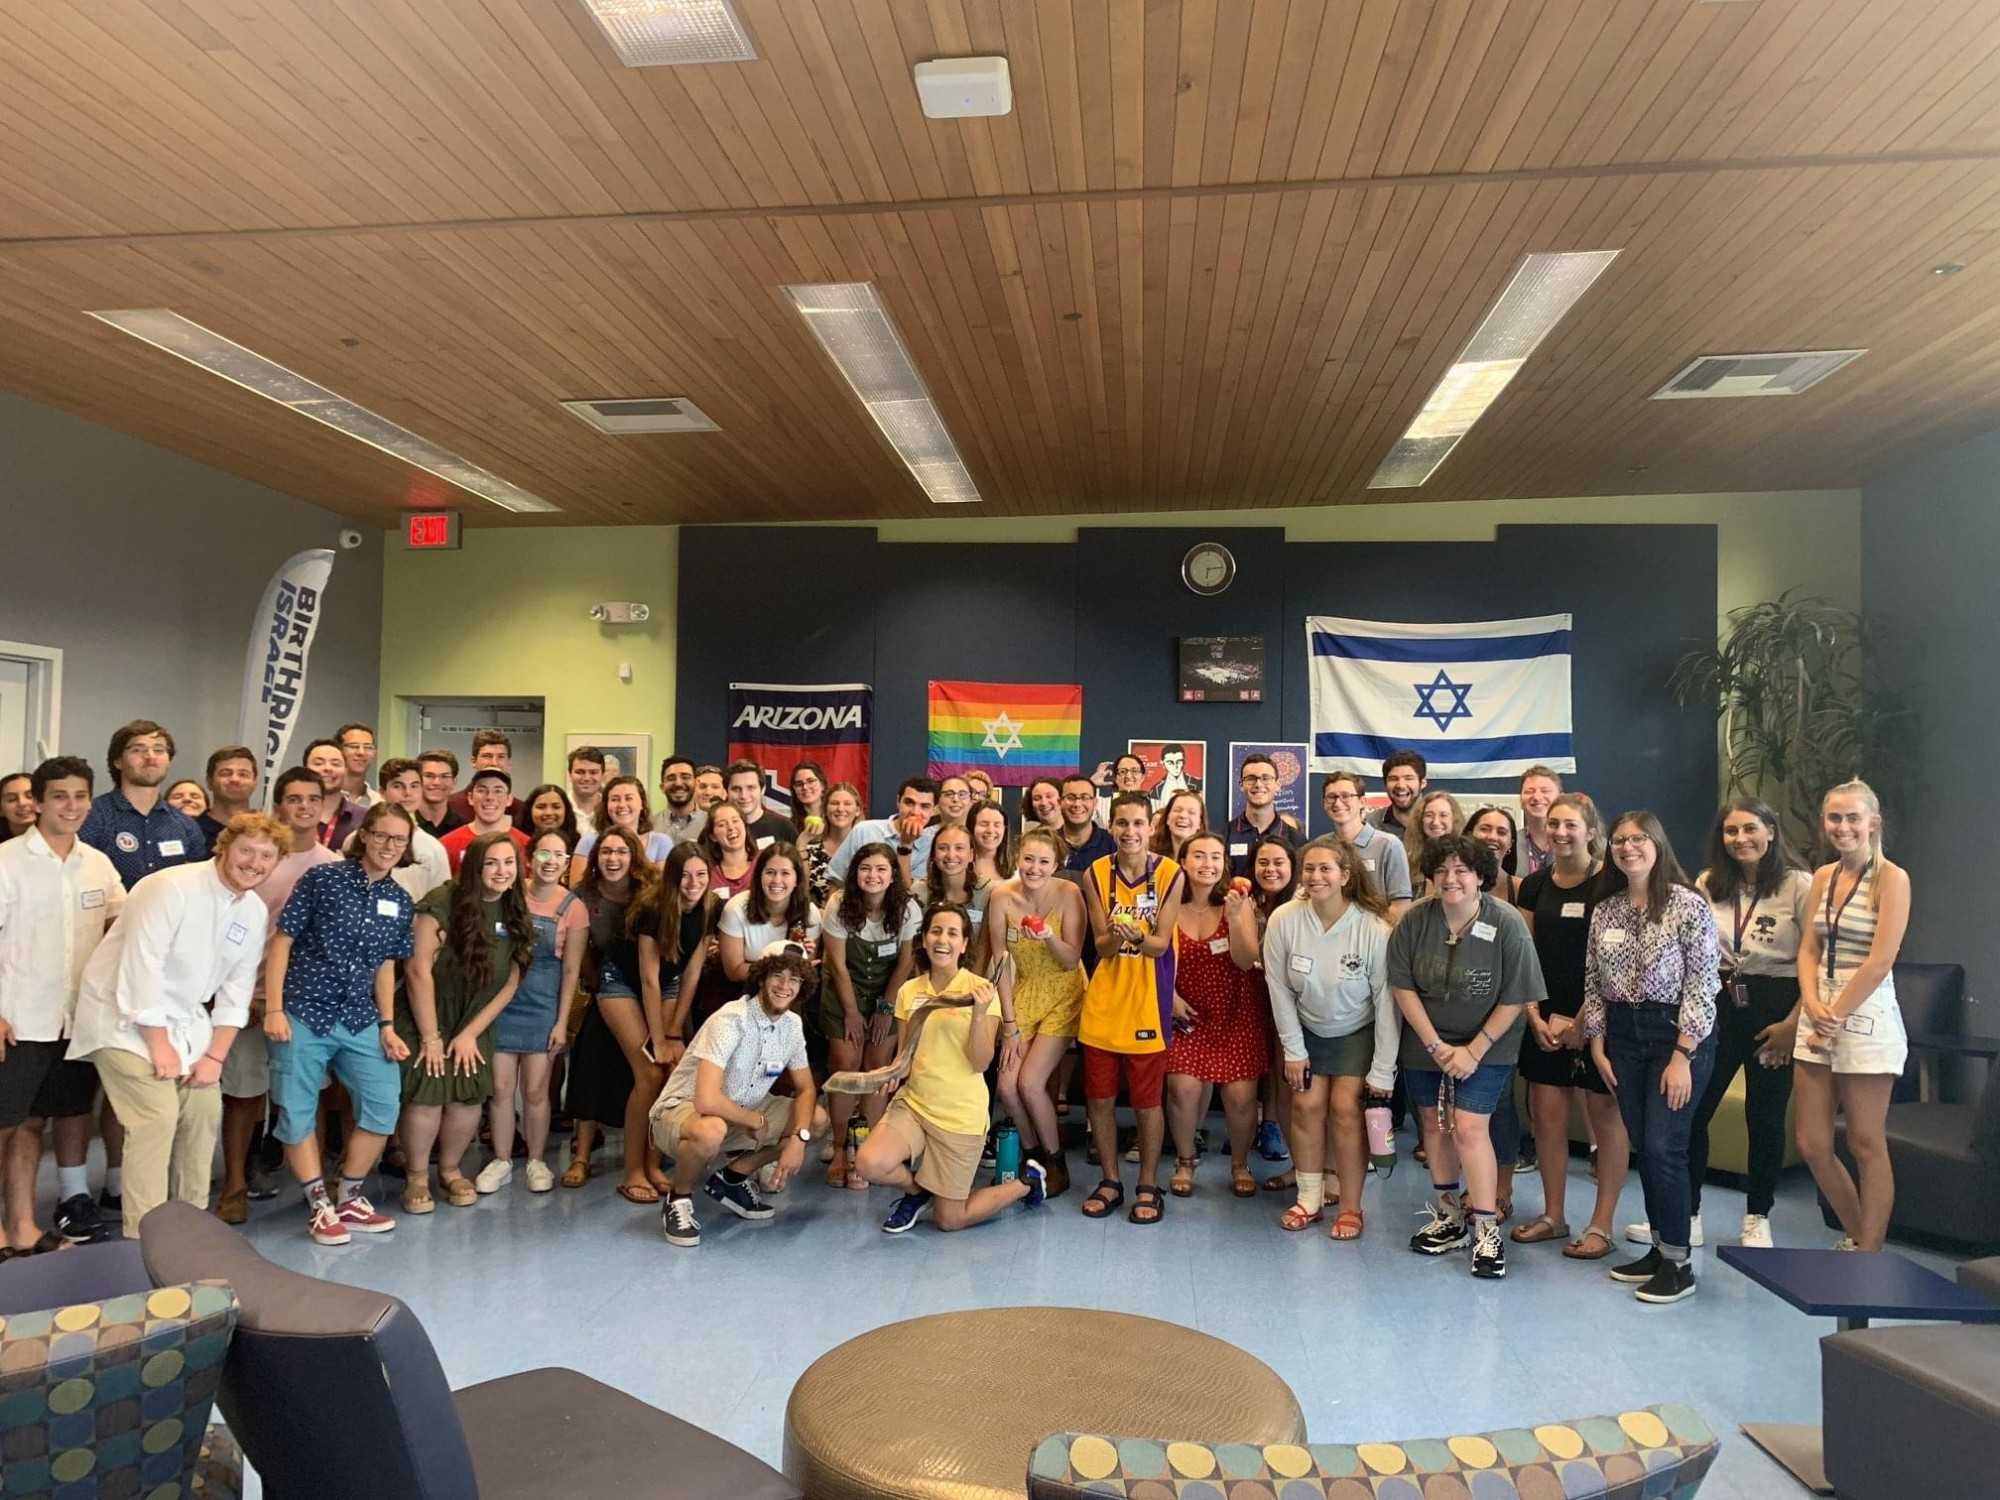 Members of the Hillel Foundation gather together. The Hillel Foundation focused on serving the a Jewish community at the UA. (Photo courtesy Lisa Friedman) 